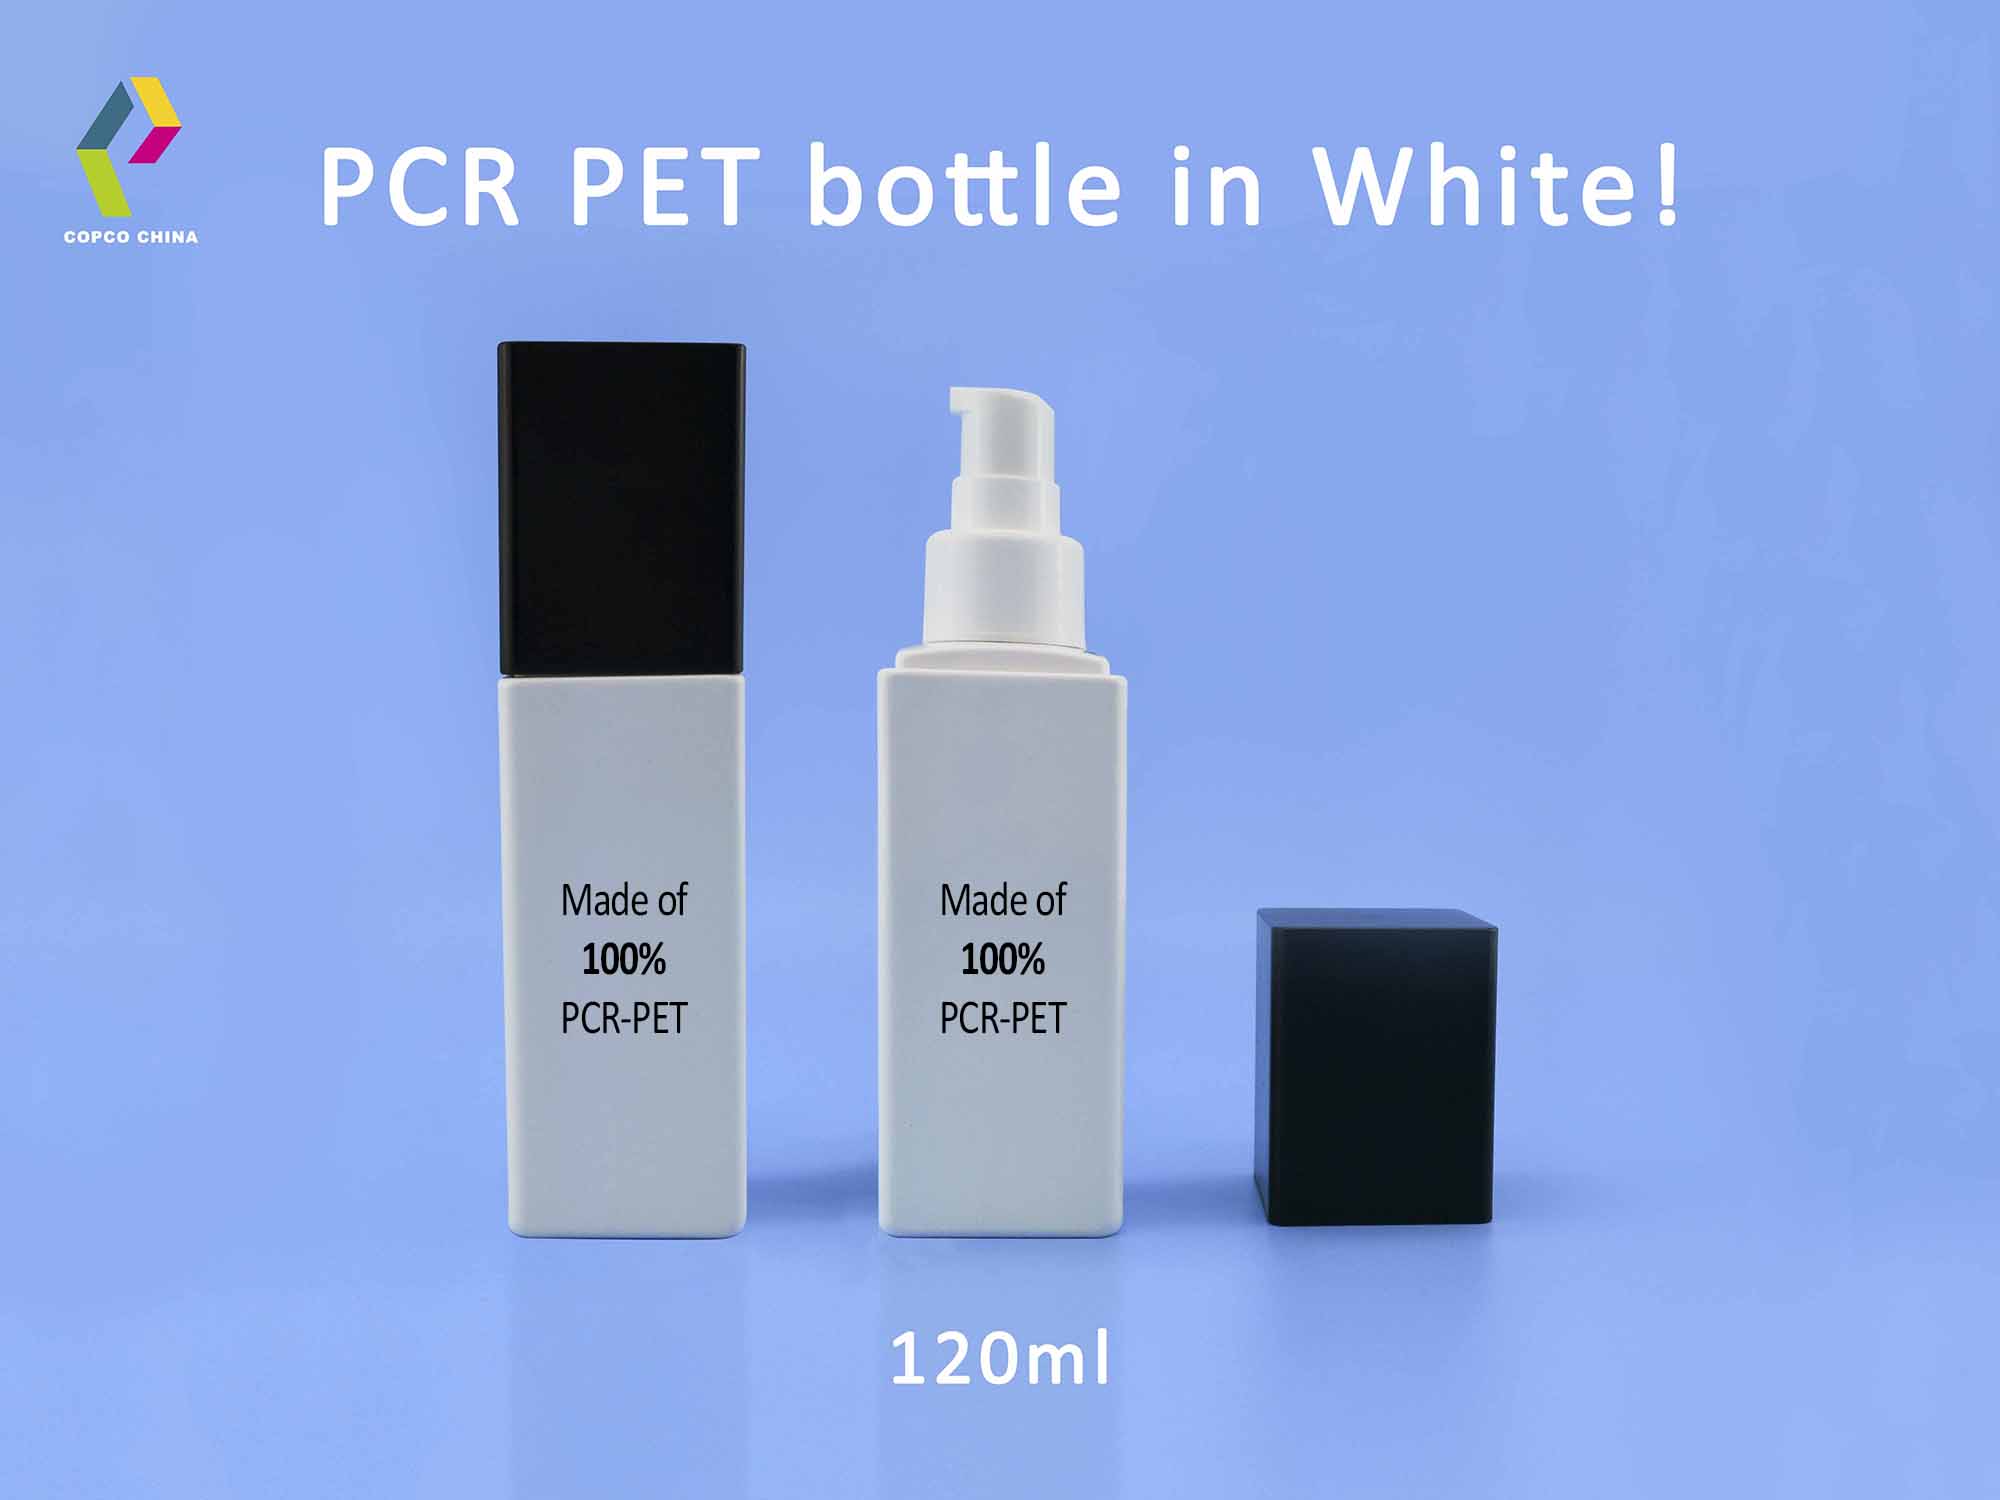 COPCO - PCR PET white (2k).jpg